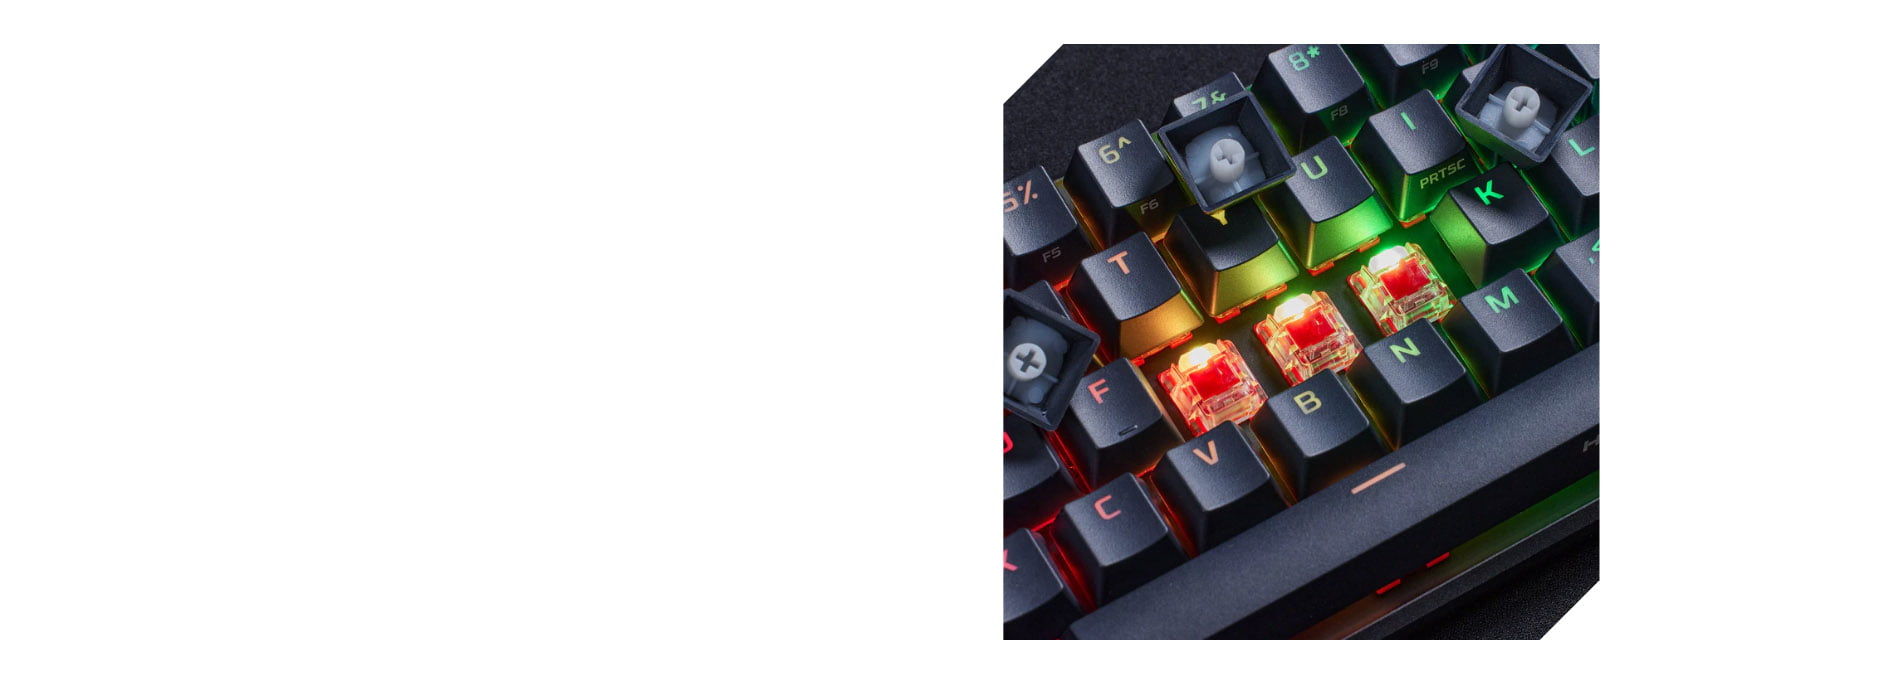 HyperX Alloy Origins 65 - Mechanical Gaming Keyboard - HX Red (US Layout) [ HKBO1T-RD-US/N ]